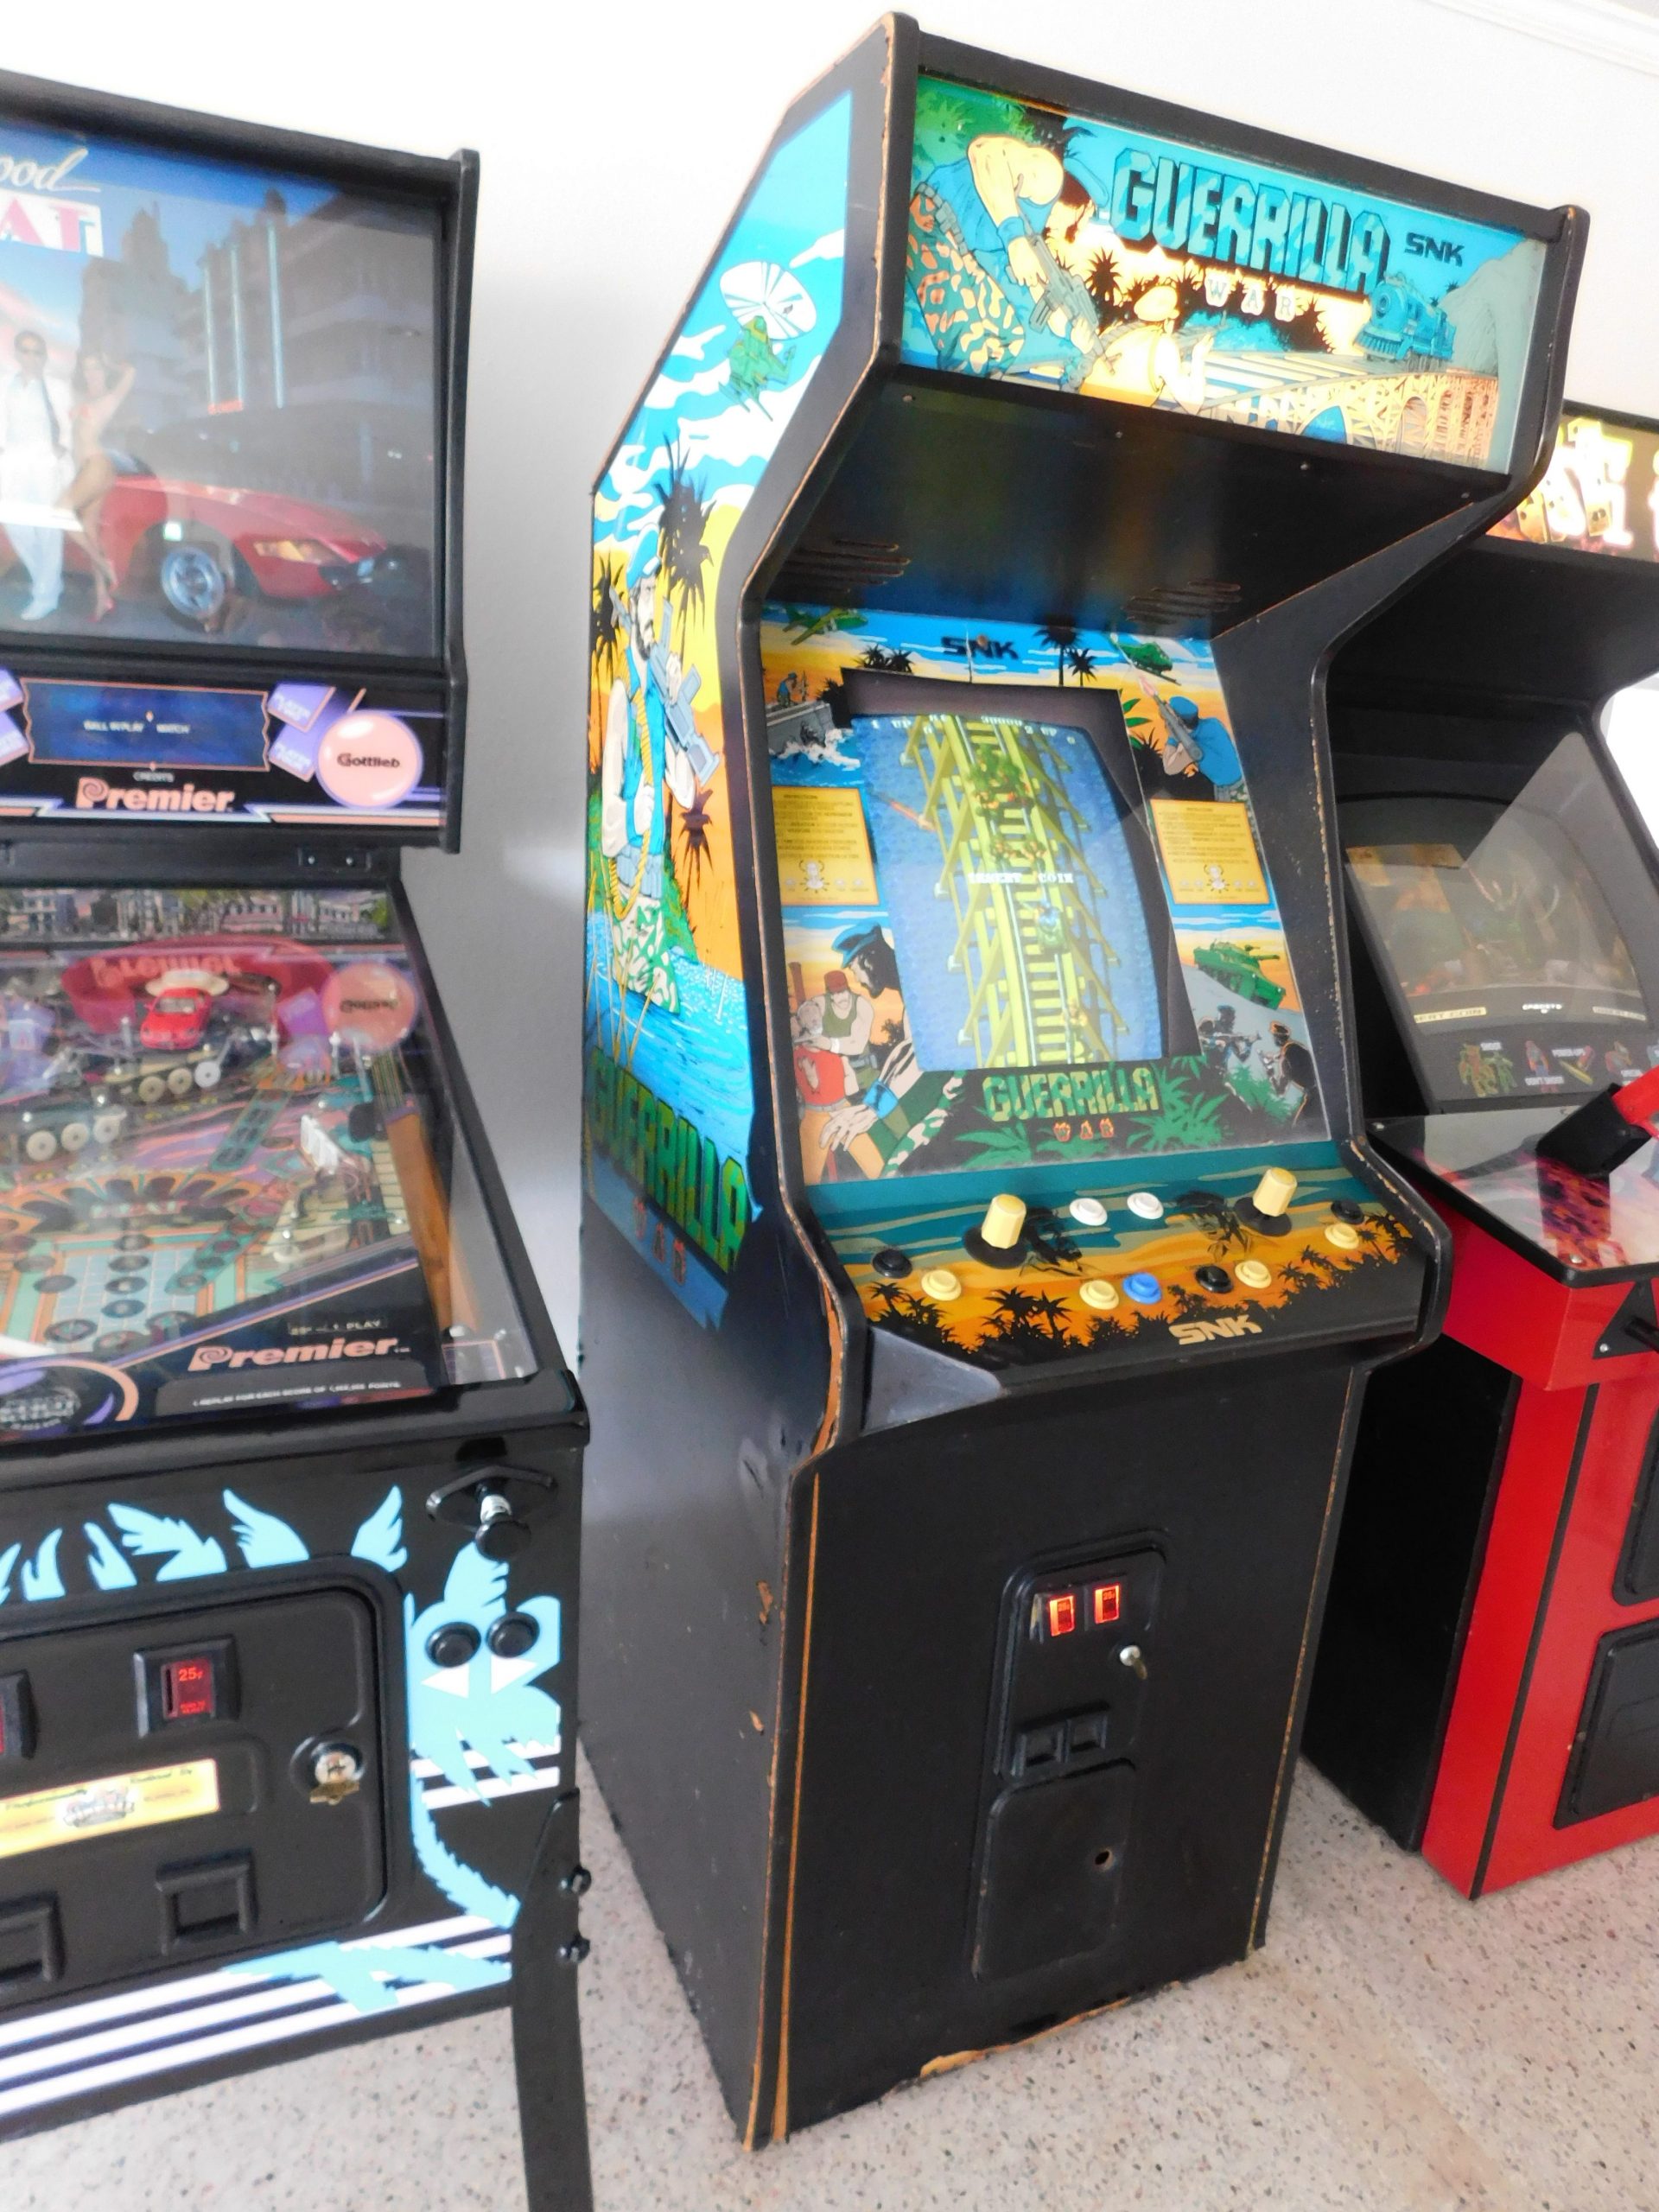 Pinball Restorations, SNK Guerrilla War Arcade Game